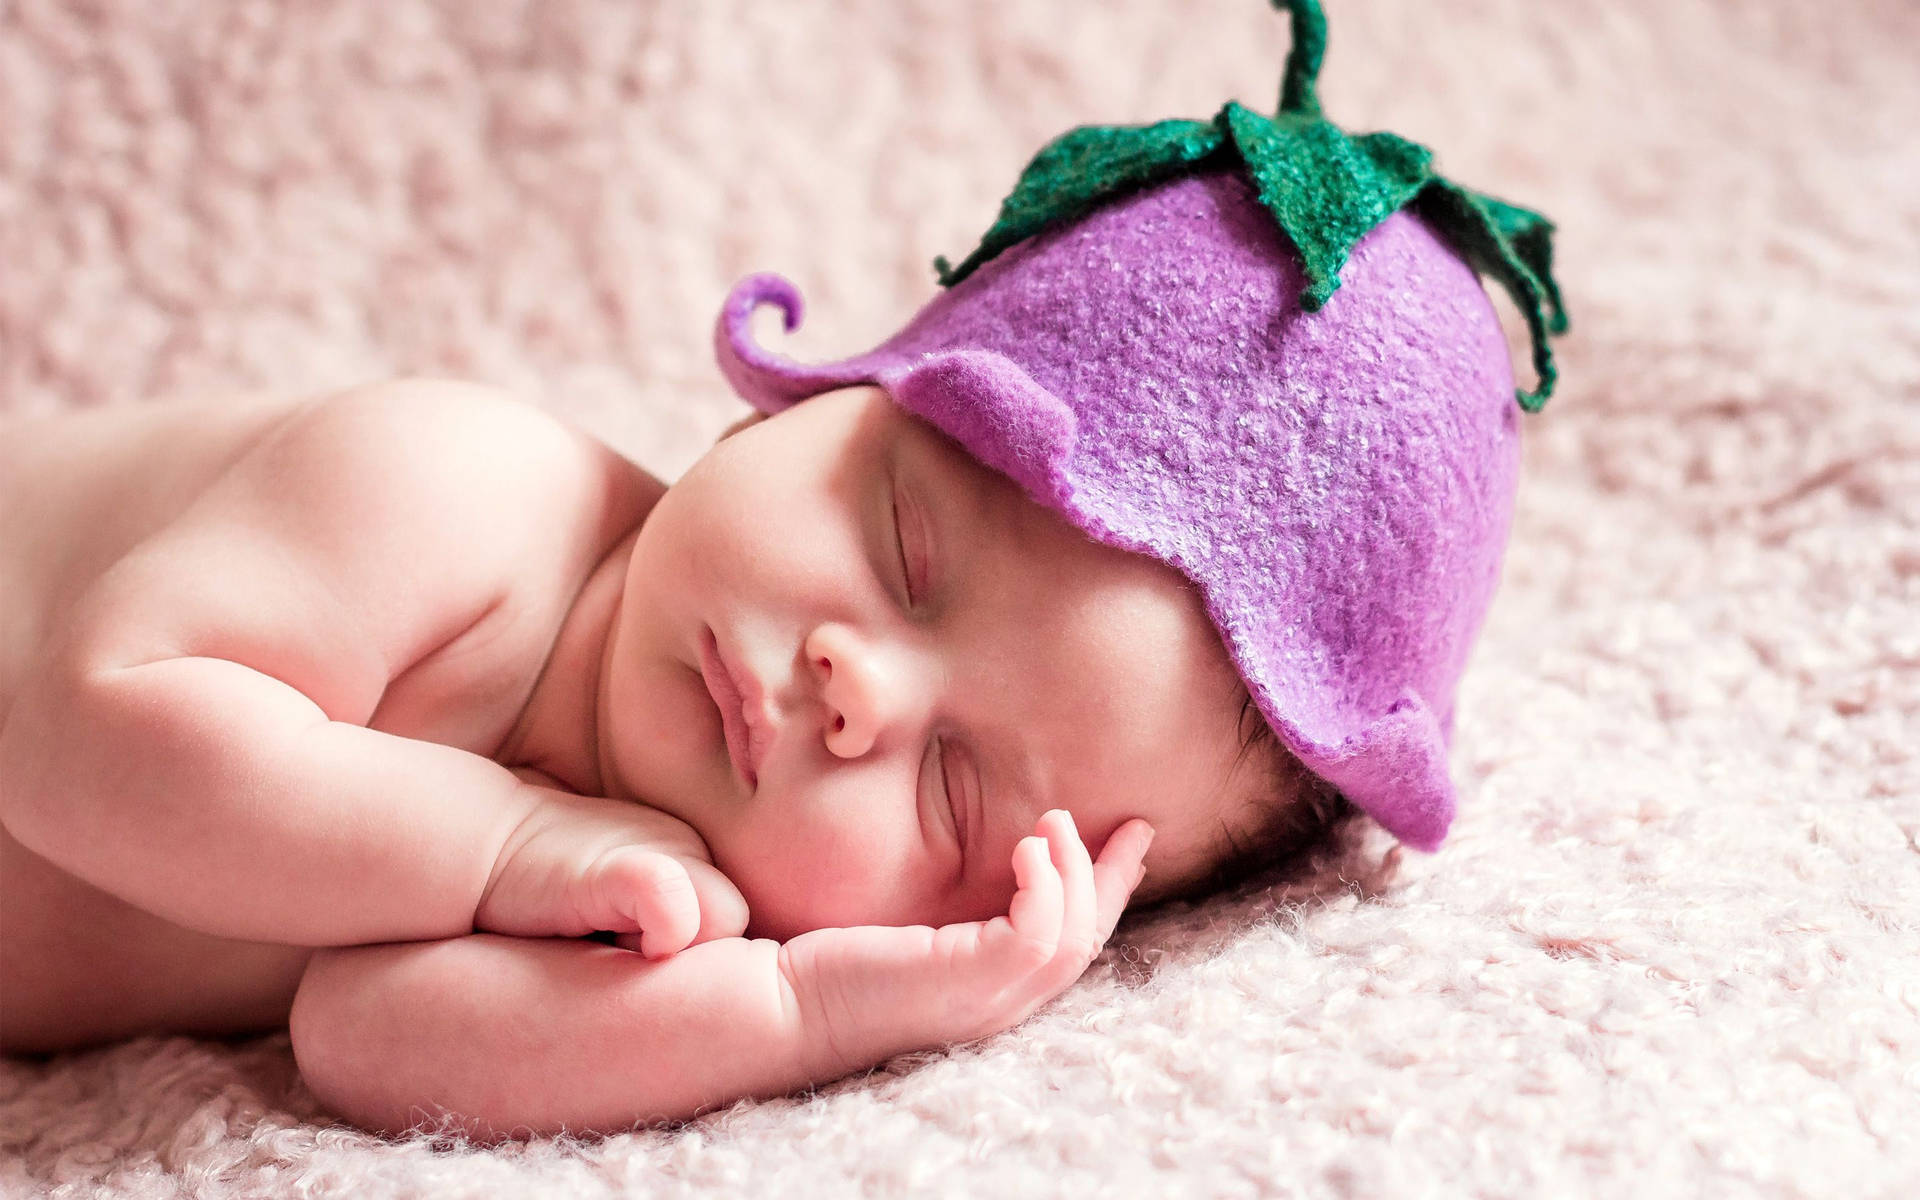 Top 999+ Newborn Baby Wallpaper Full HD, 4K✅Free to Use